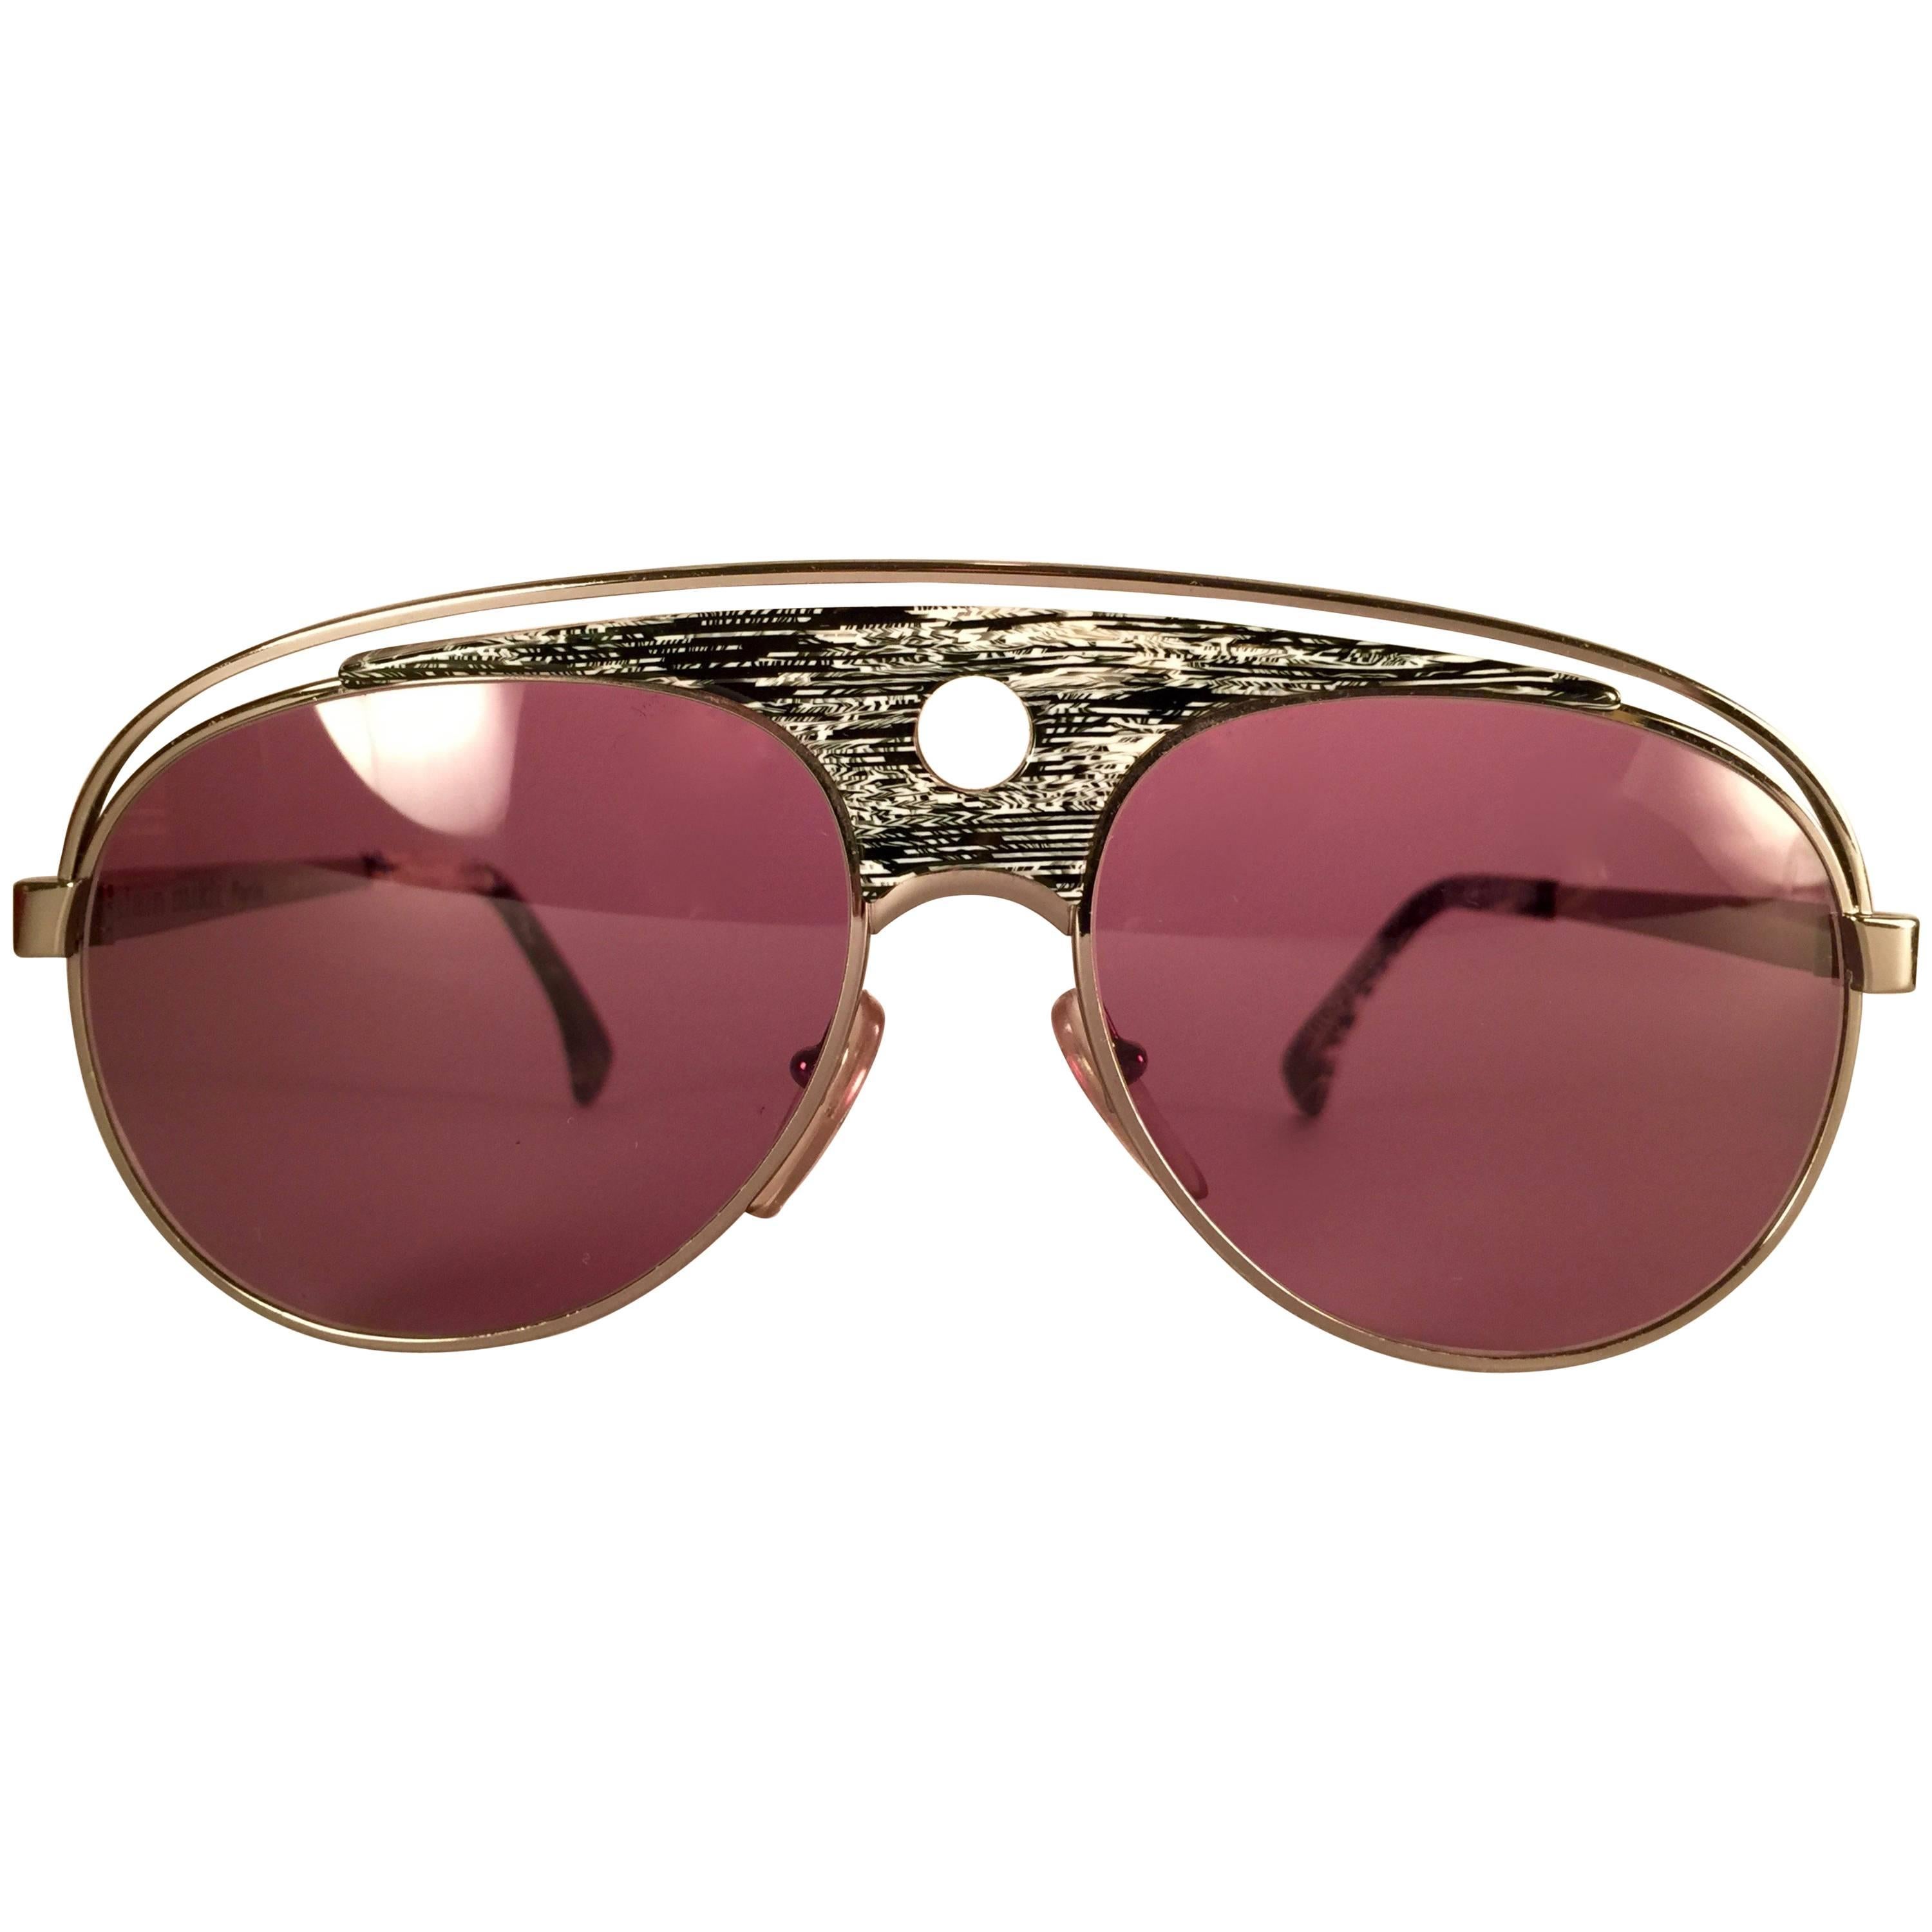 New Vintage Rare Alain Mikli 633 Aviator Black & White France Sunglasses 1980